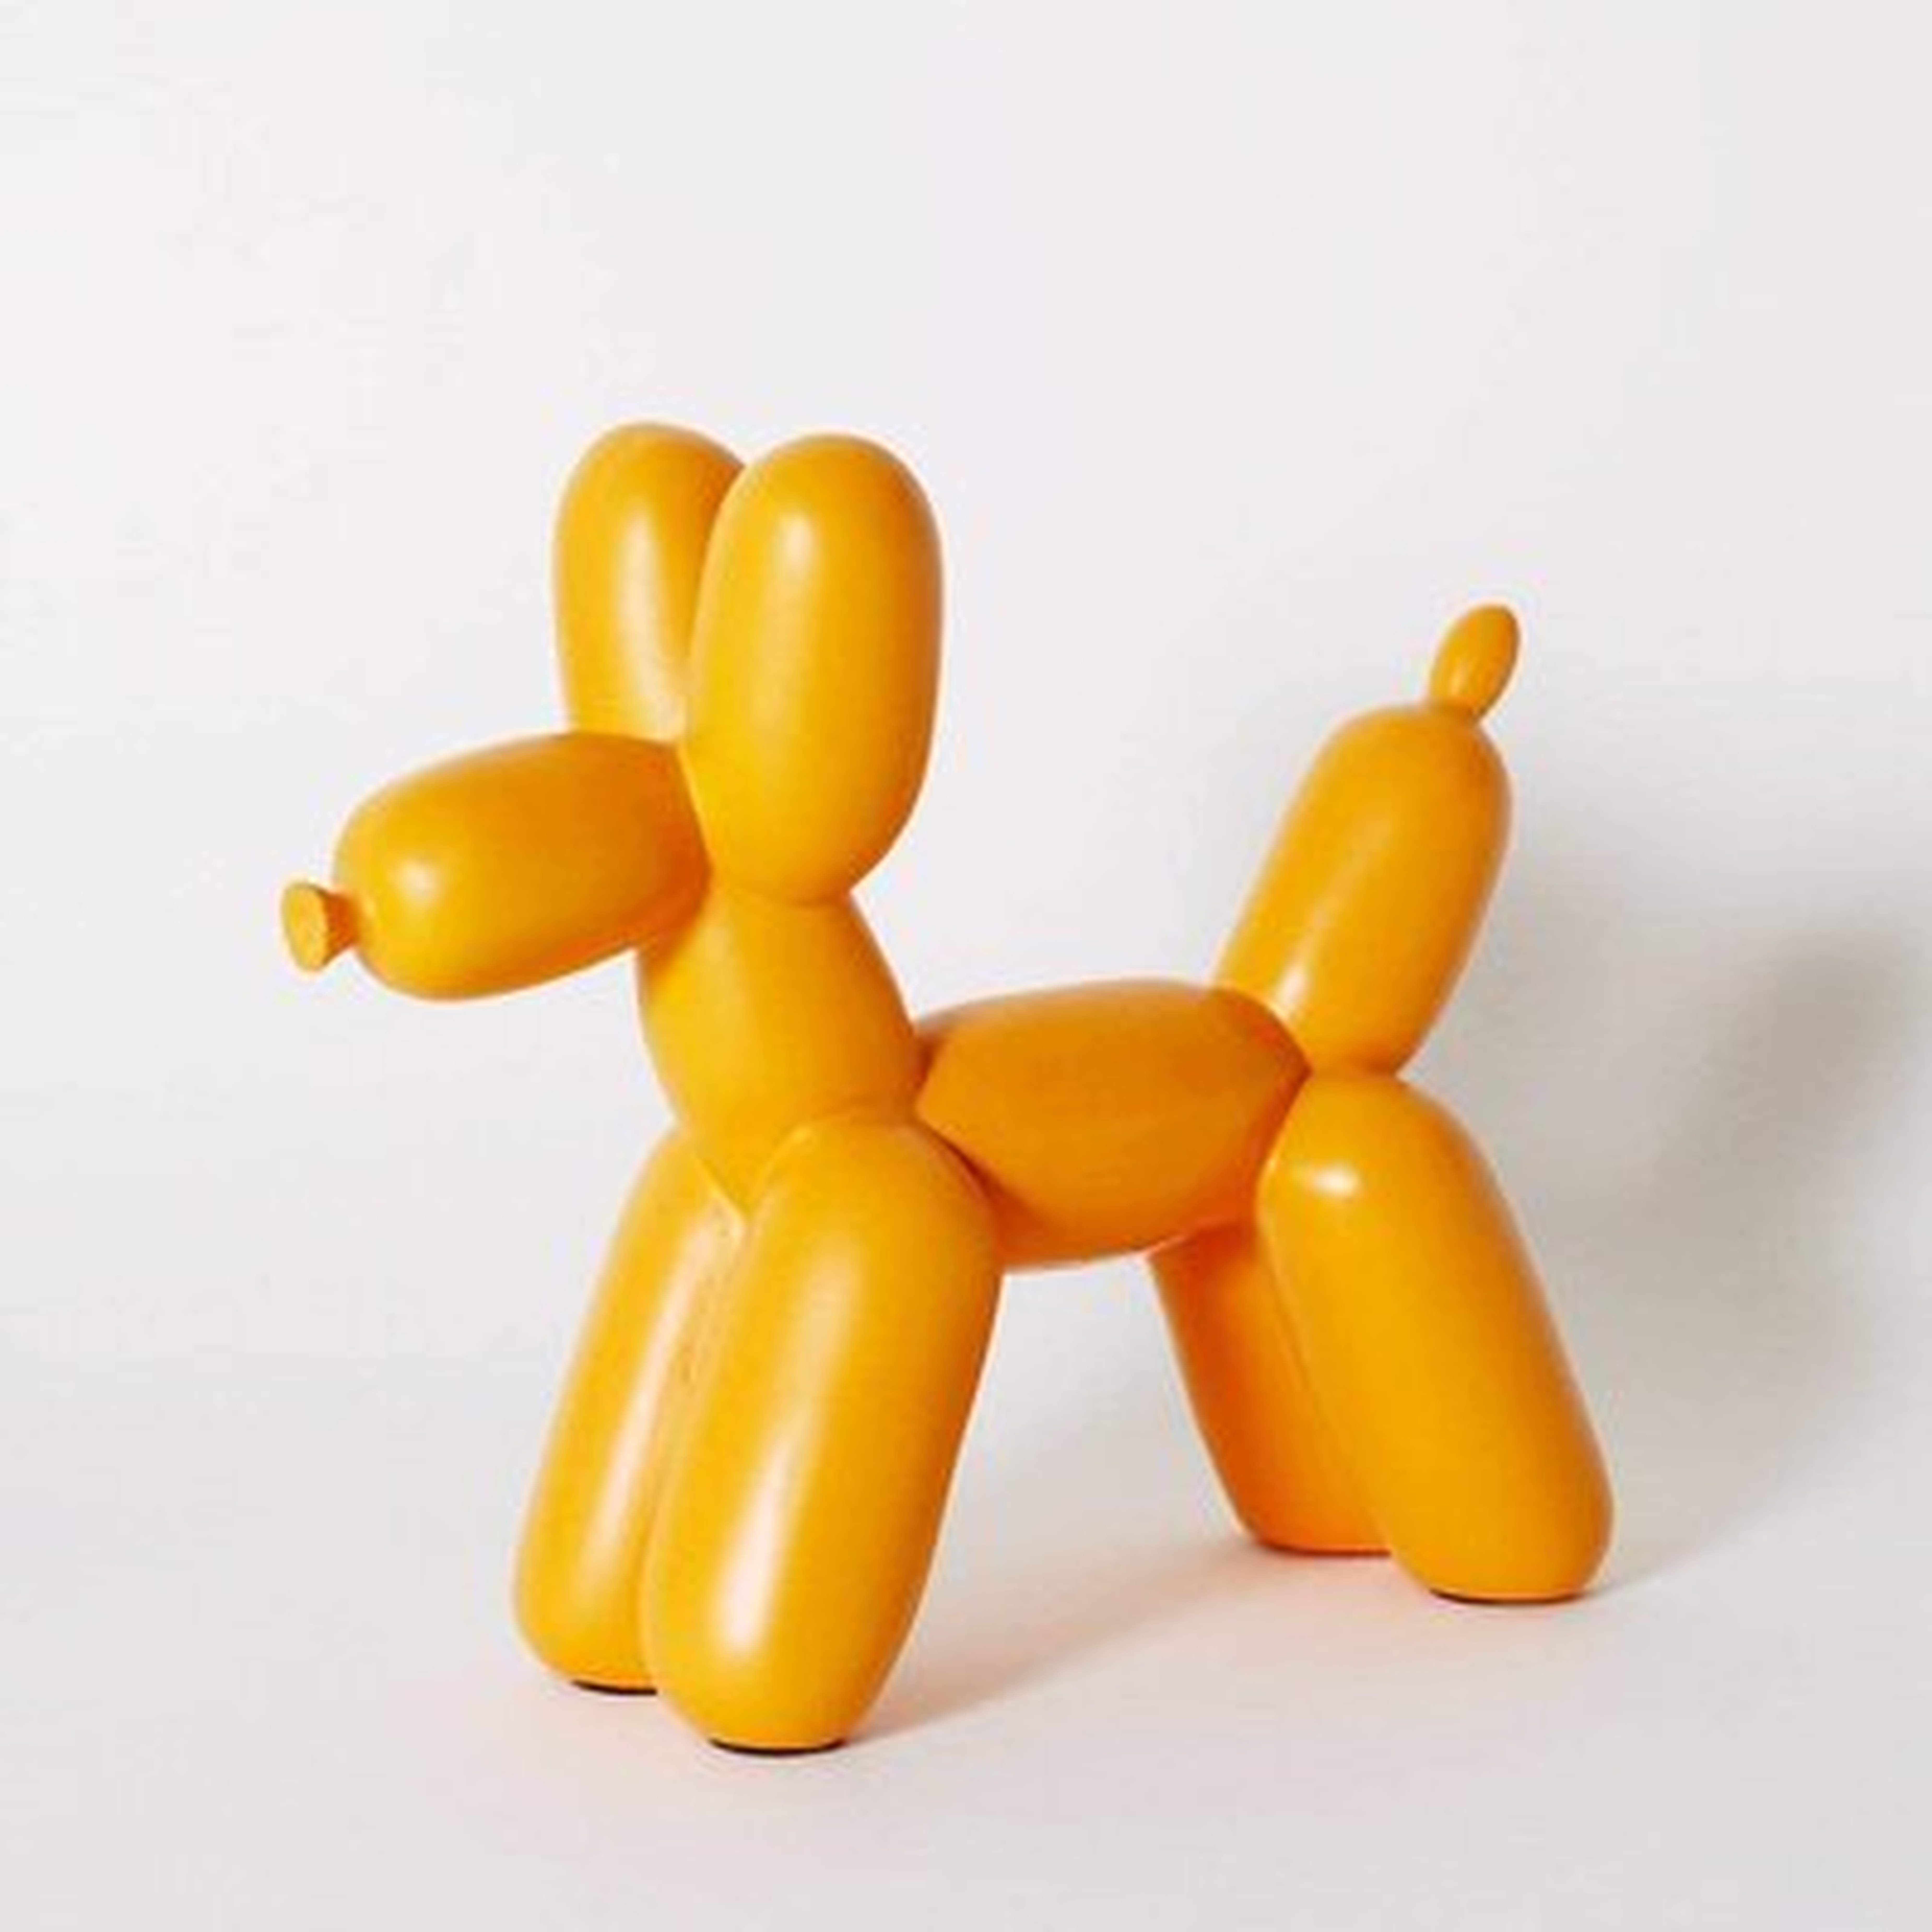 Balloon Dog Ceramic Bookend Decor And Modern Home Decor Sculpture, (orange) - Wayfair